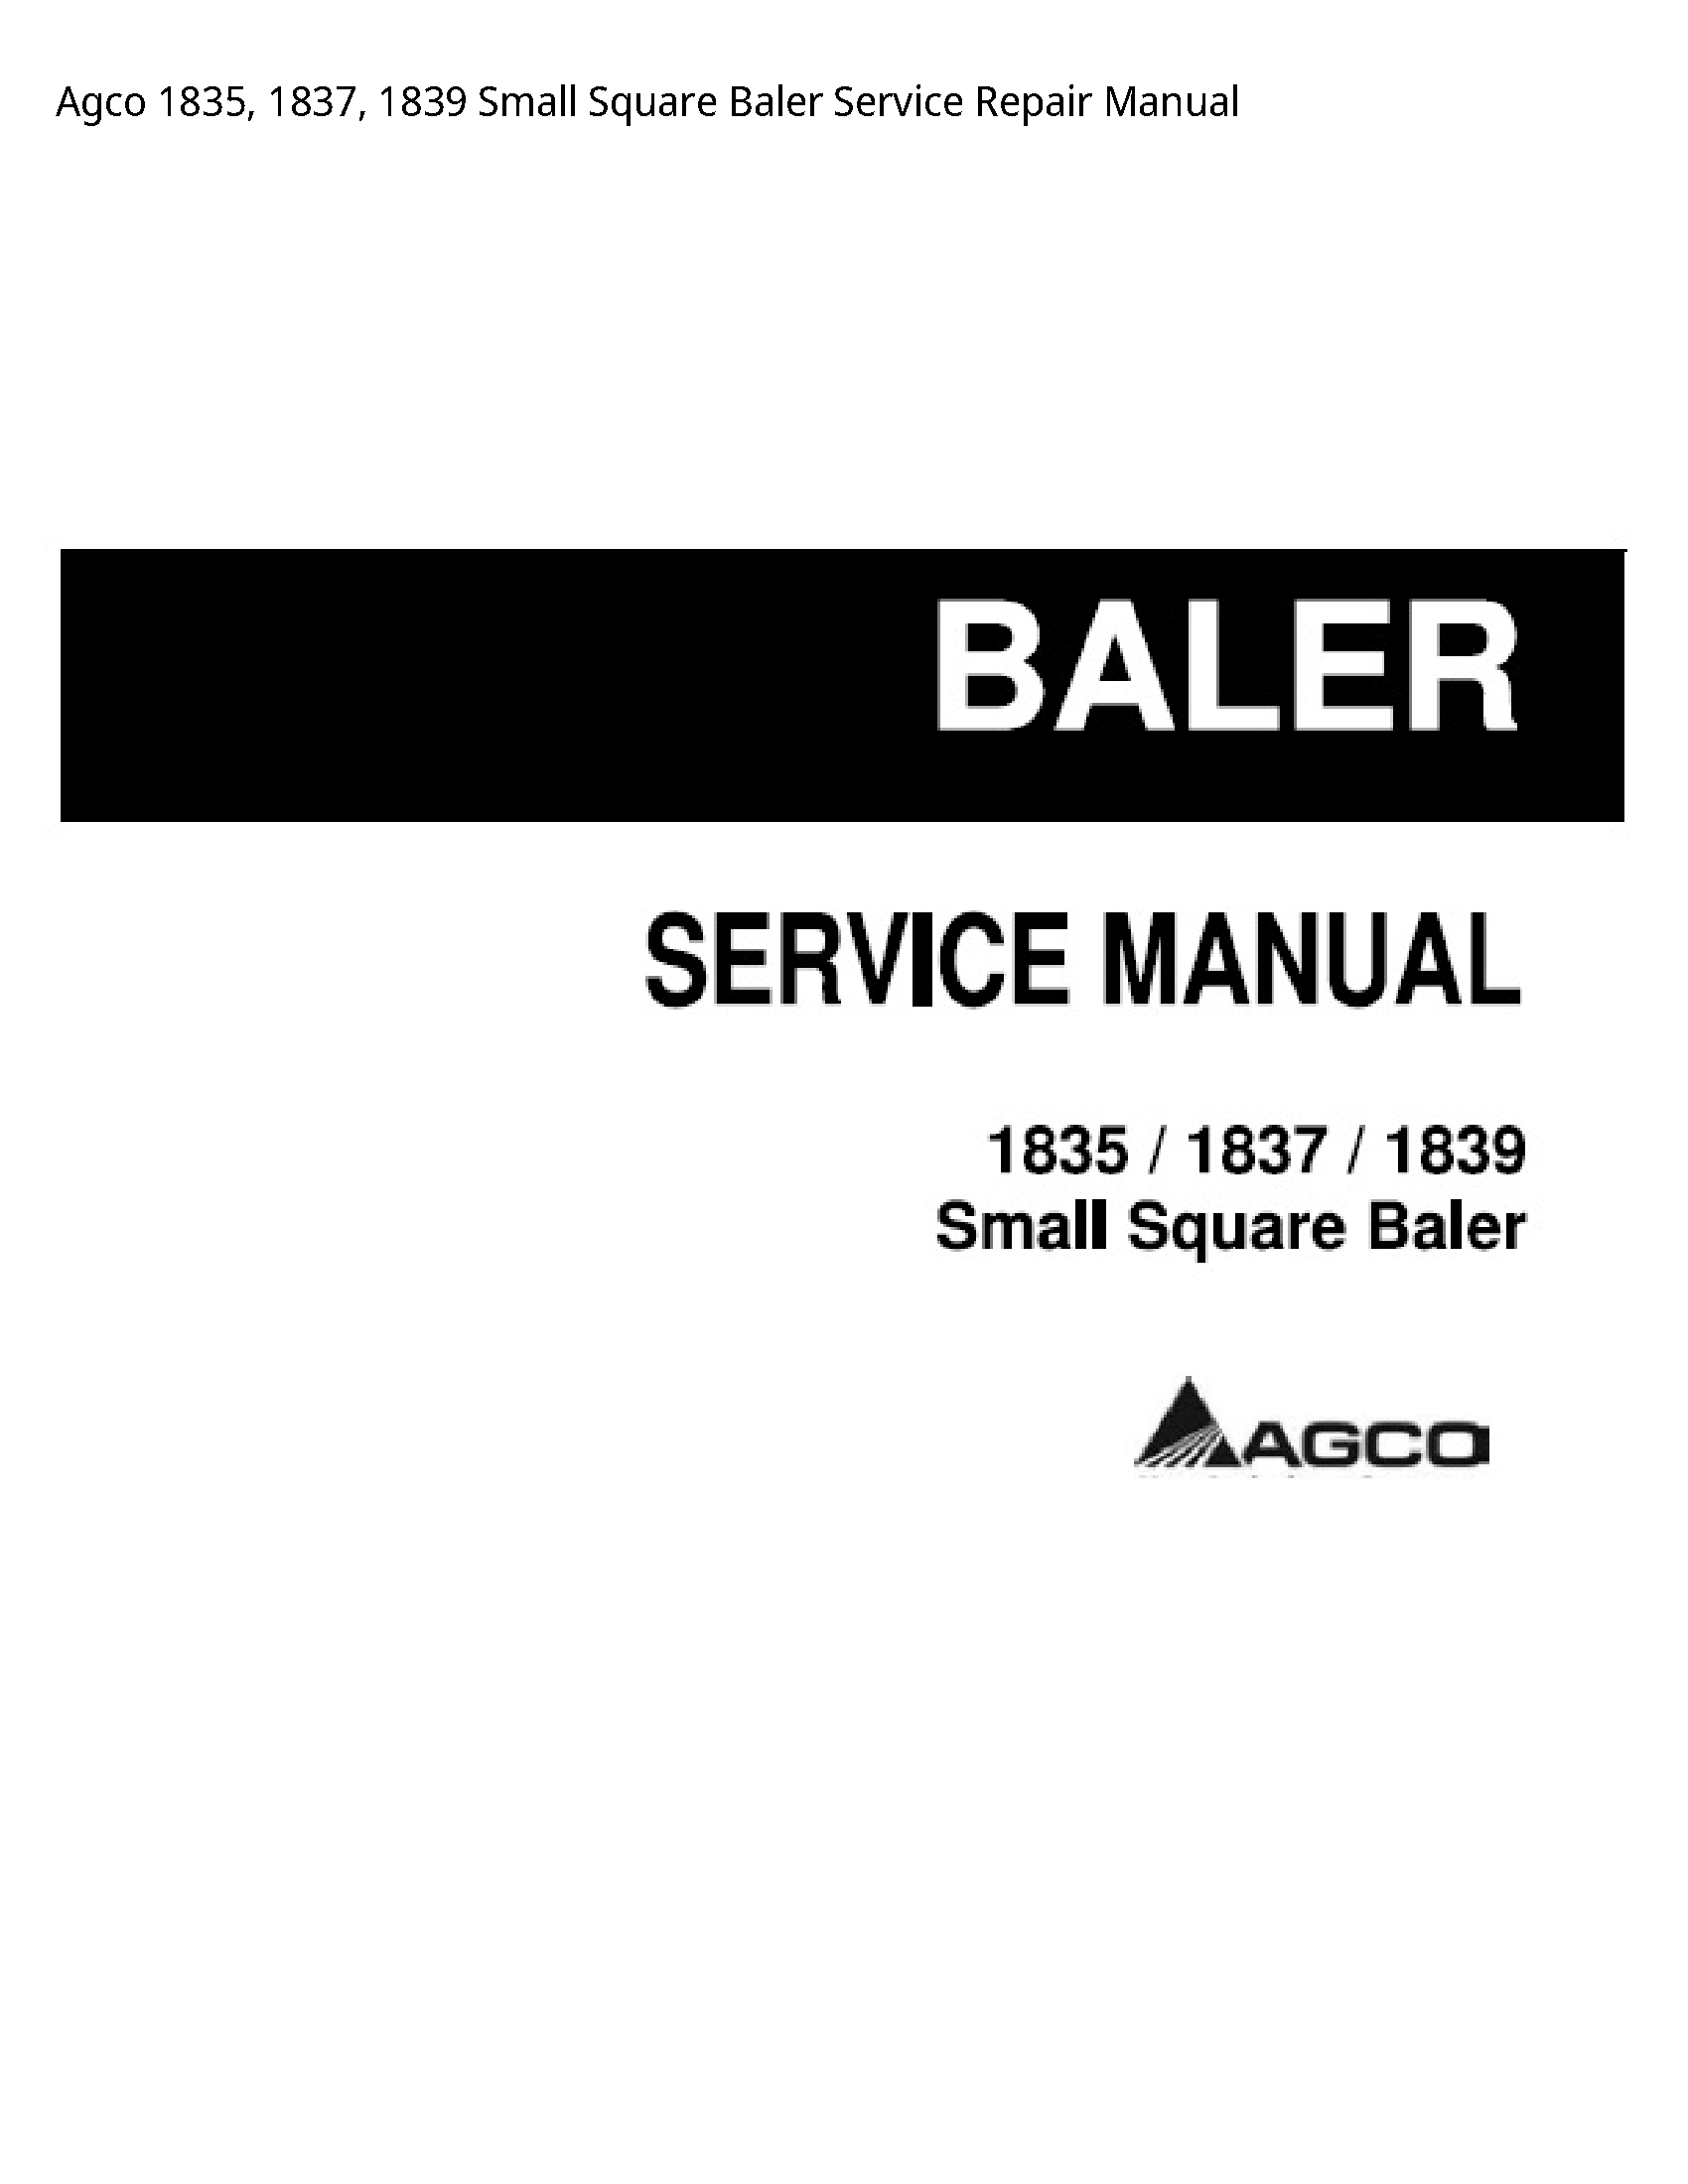 AGCO 1835 Small Square Baler manual